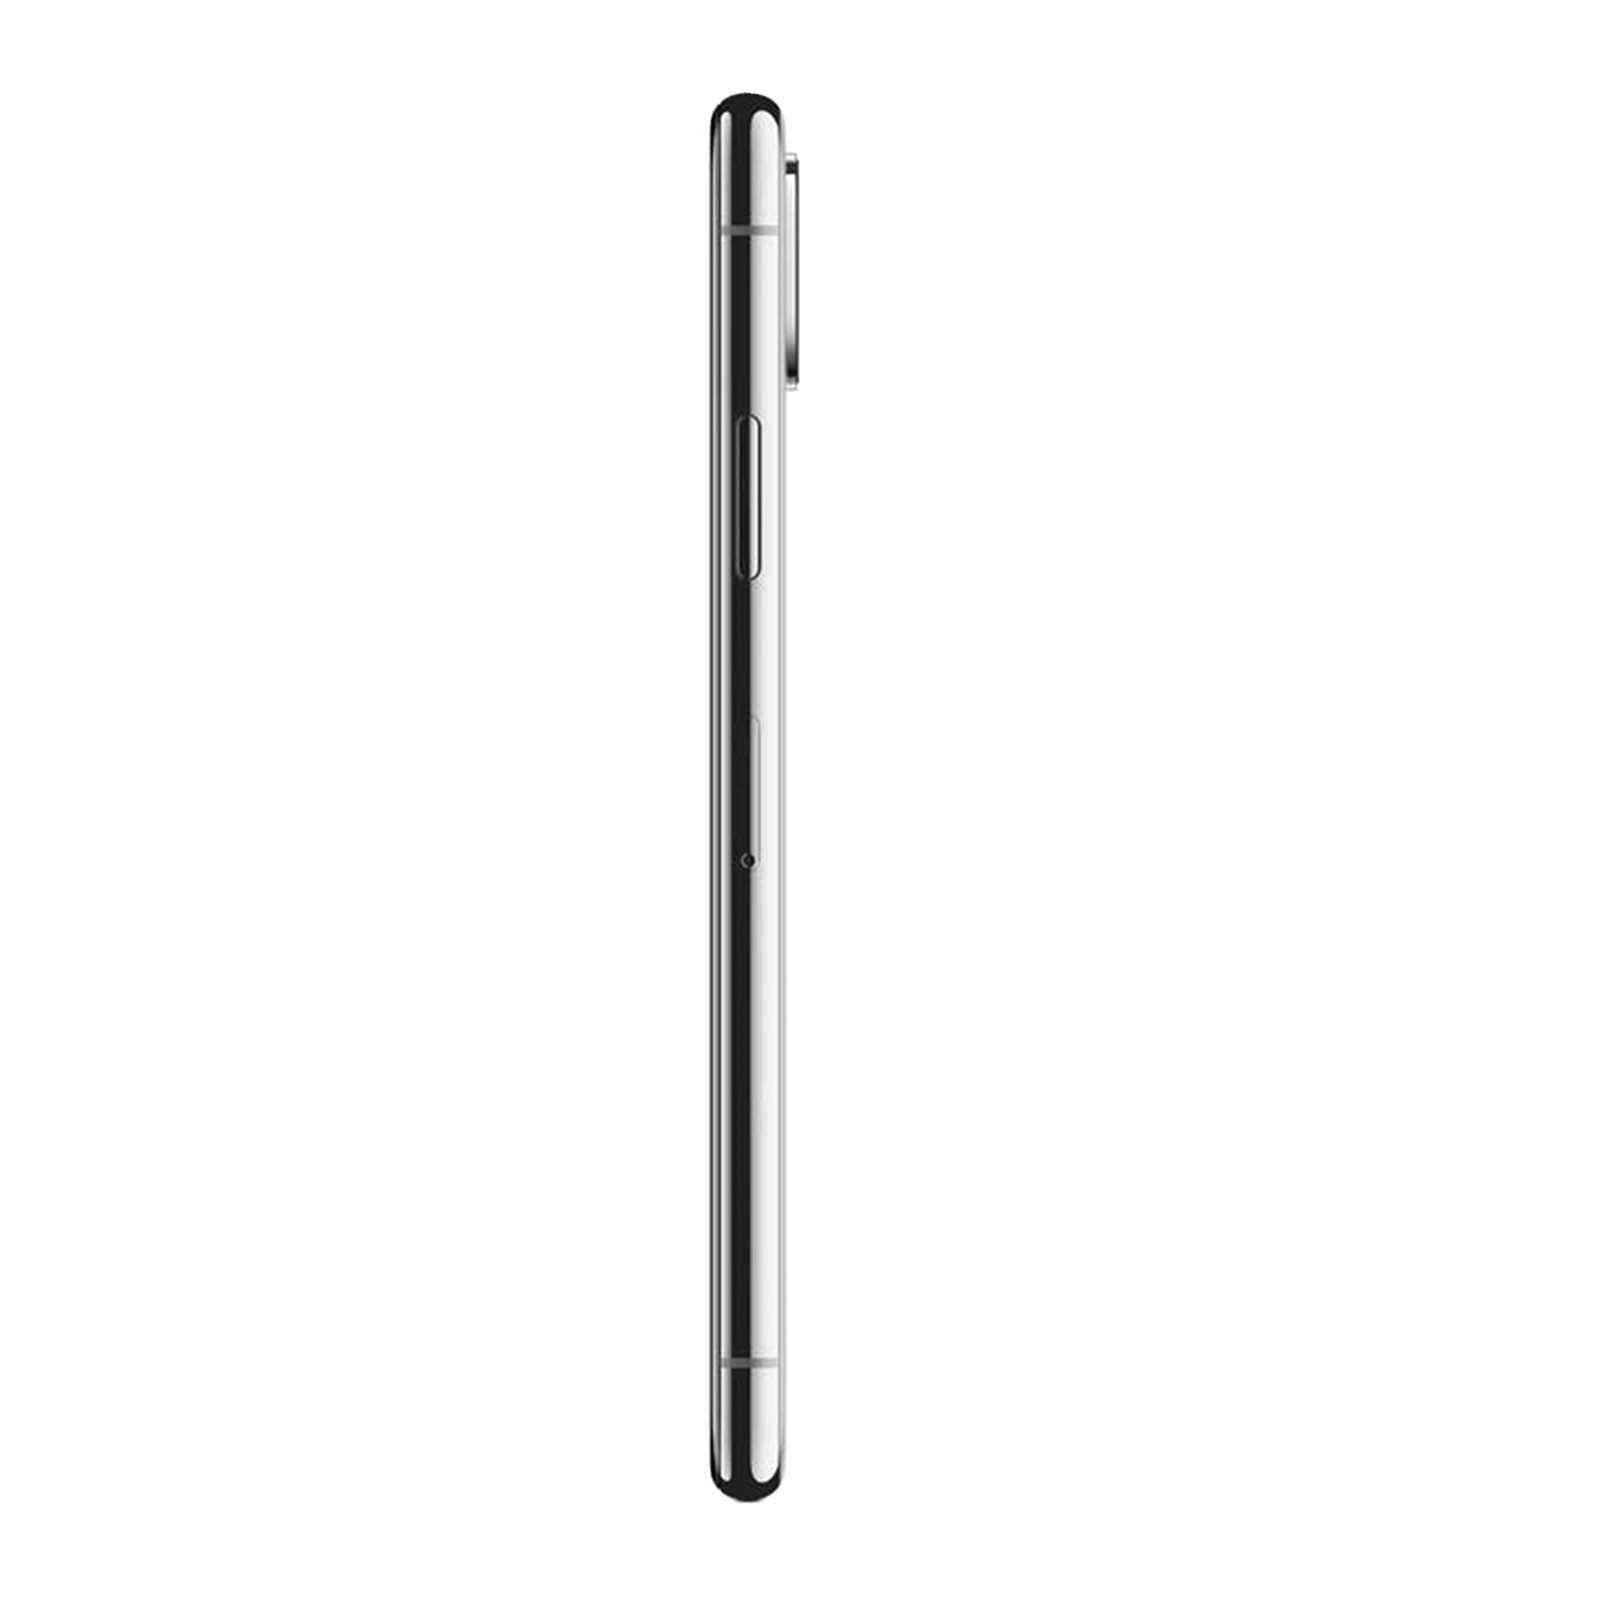 Apple iPhone XS Max 64GB Silver Fair - Unlocked